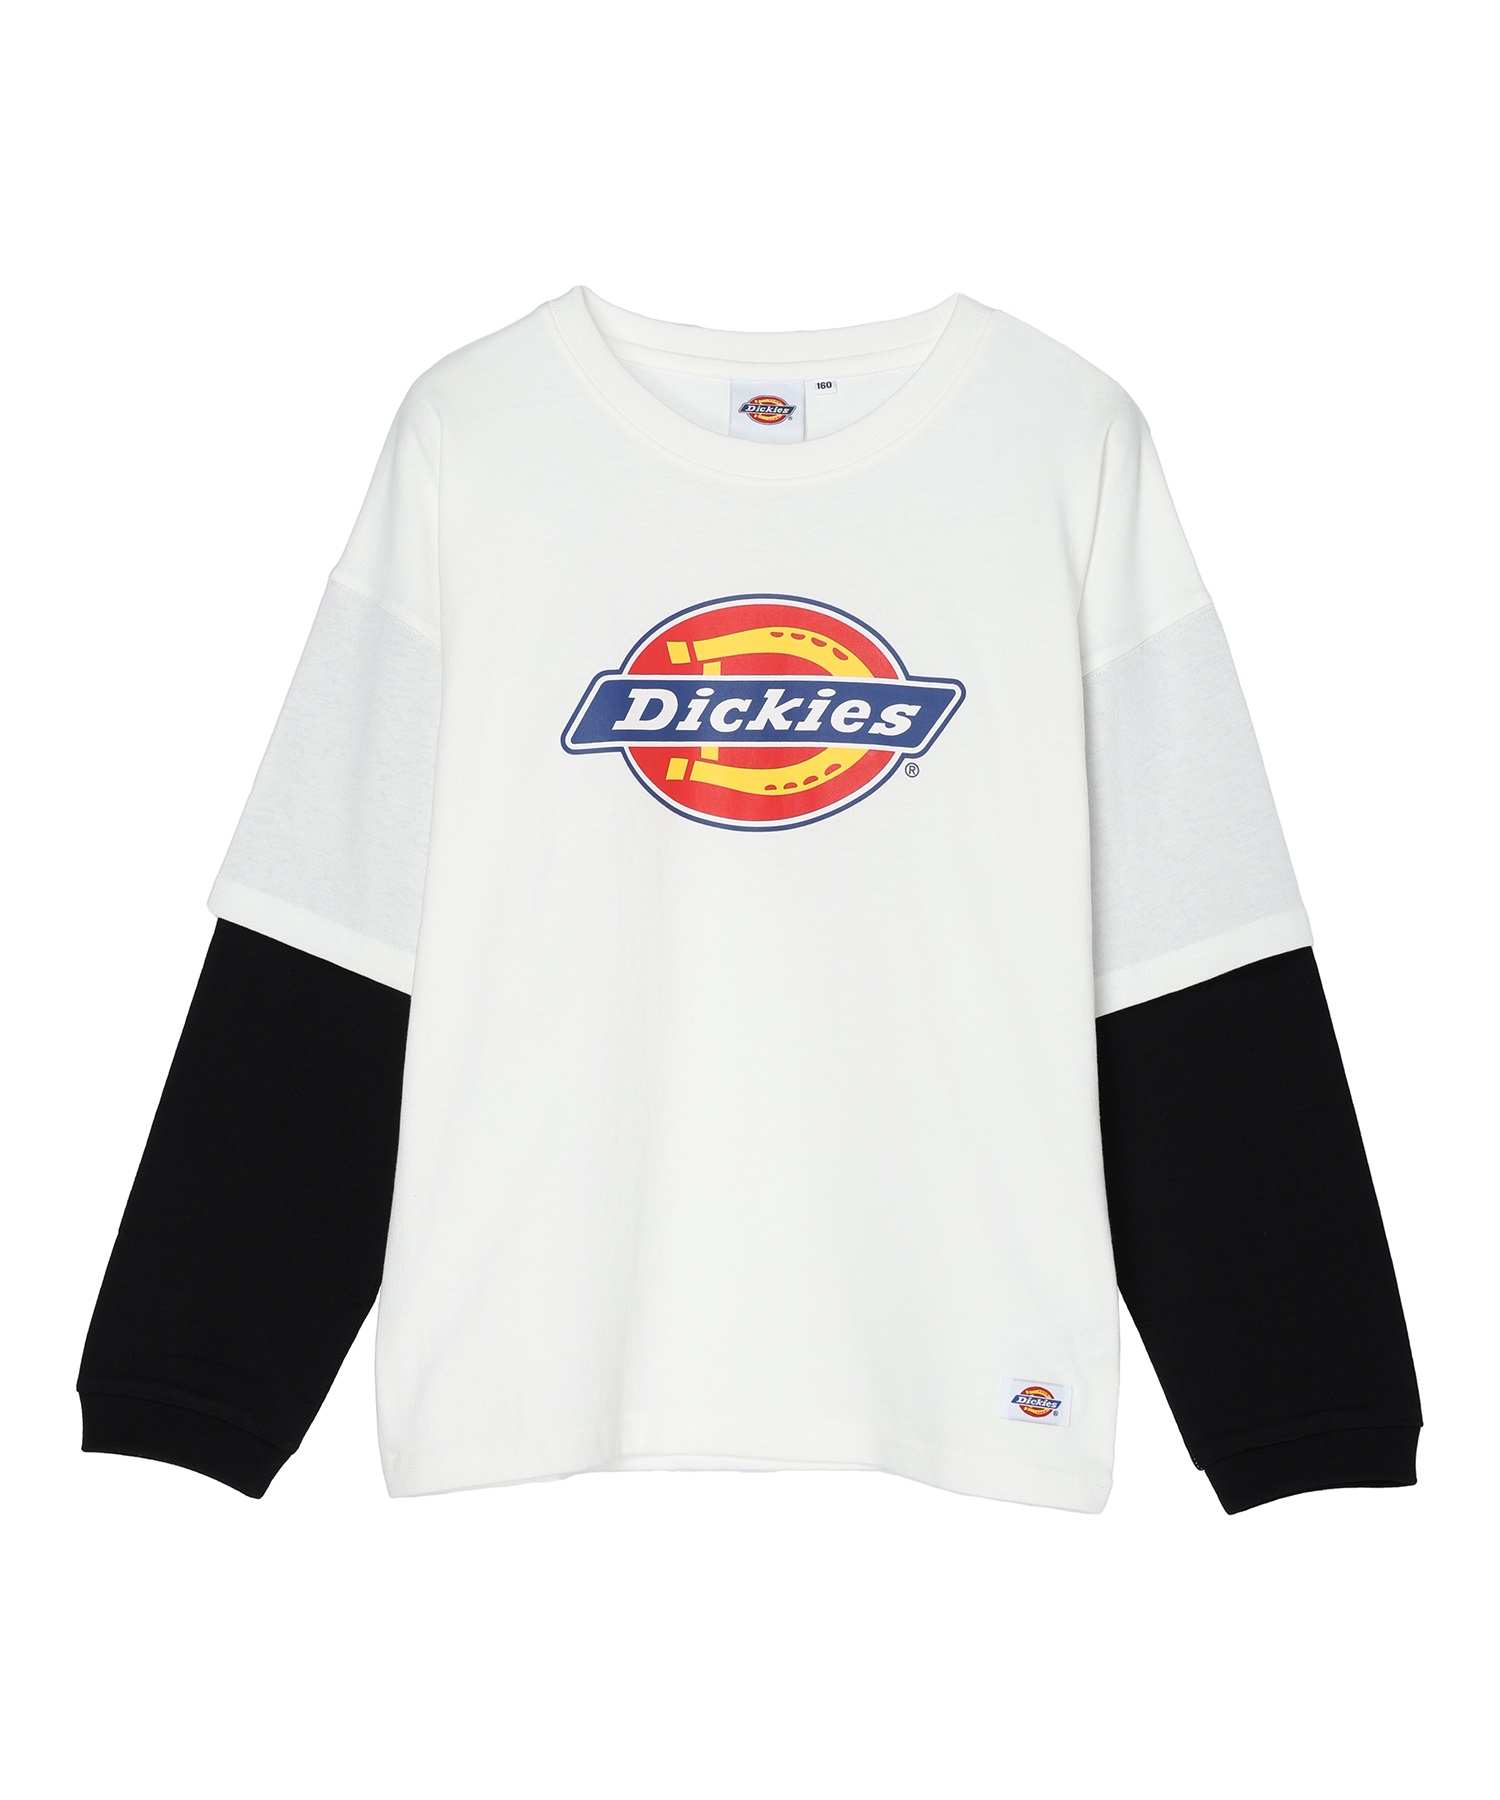 Dickies ディッキーズ LOGO LTD 80256900 キッズ 長袖Tシャツ(01WT-130)